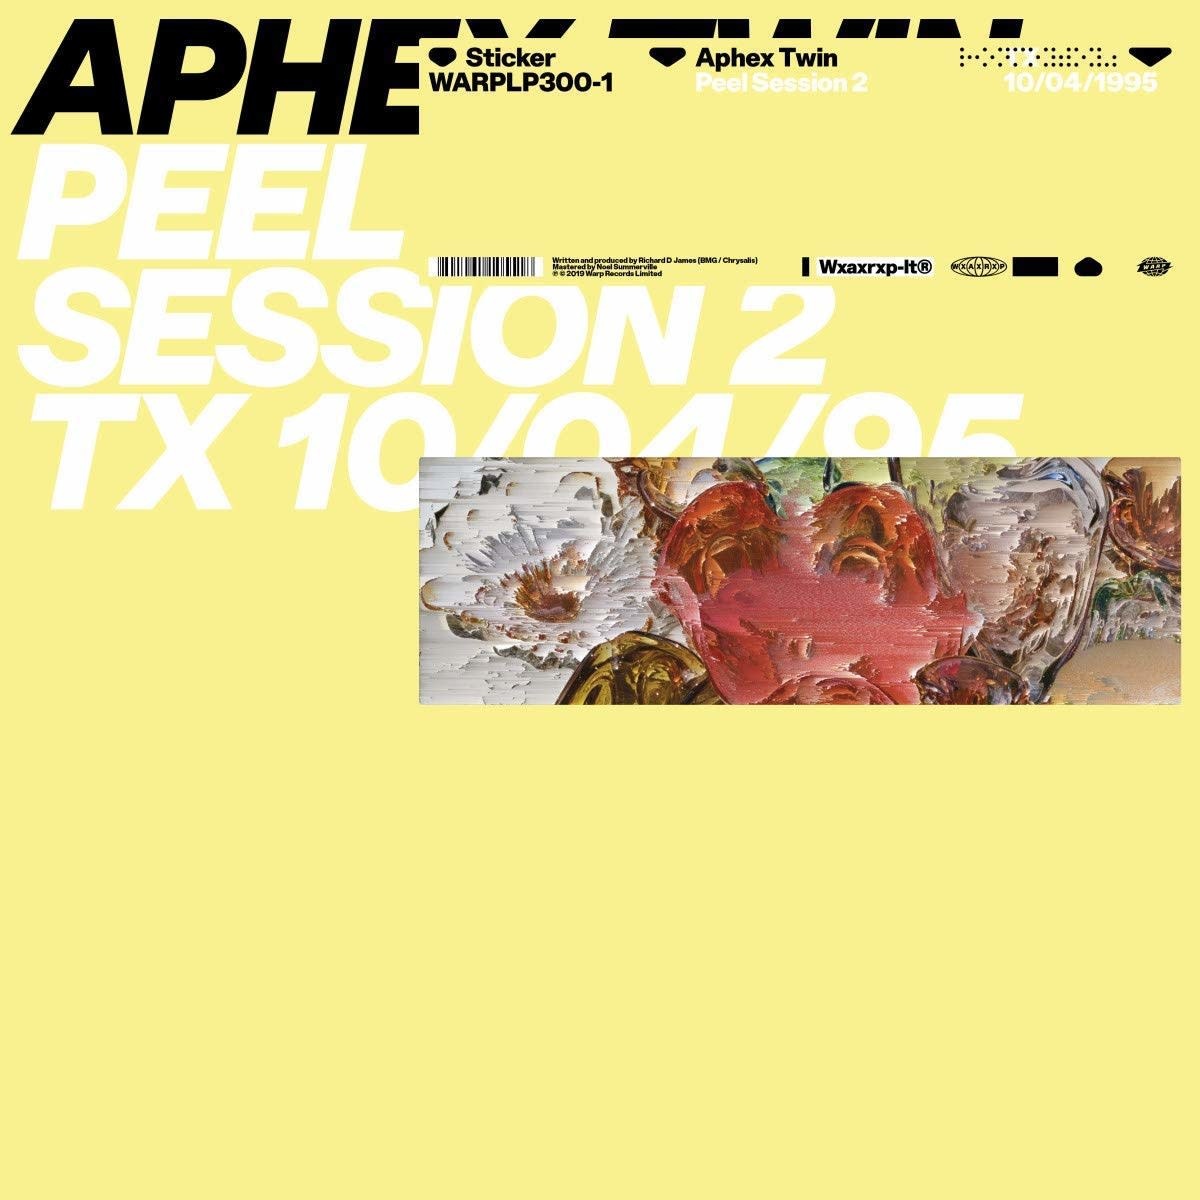 Aphex Twin - Peel Session 2 TX 10/04/95